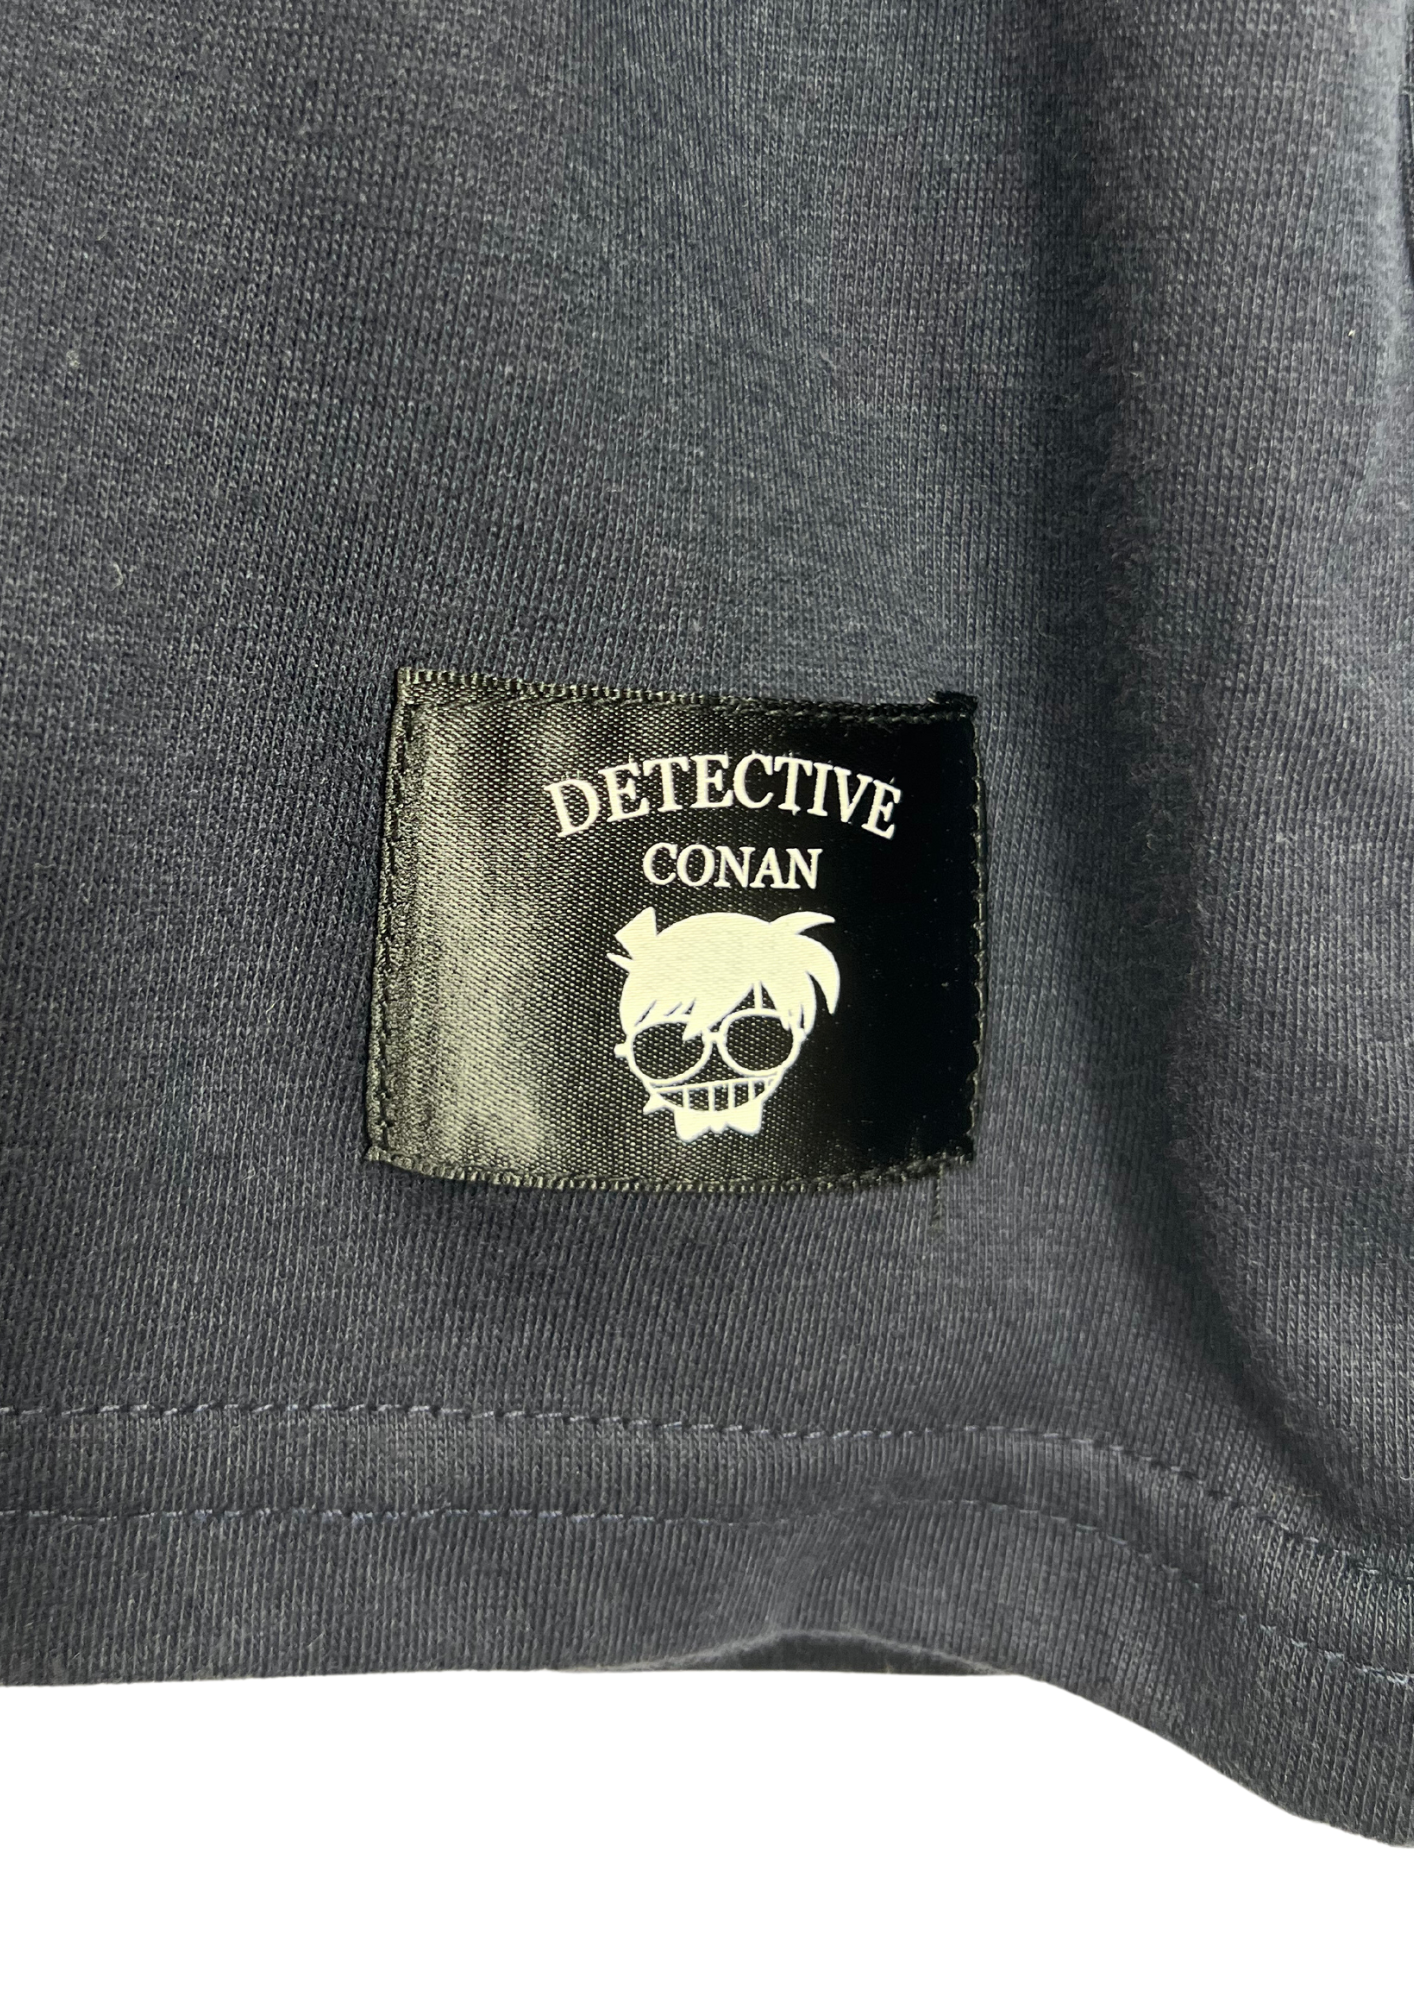 Detective Conan x Avail Box Logo T-shirt